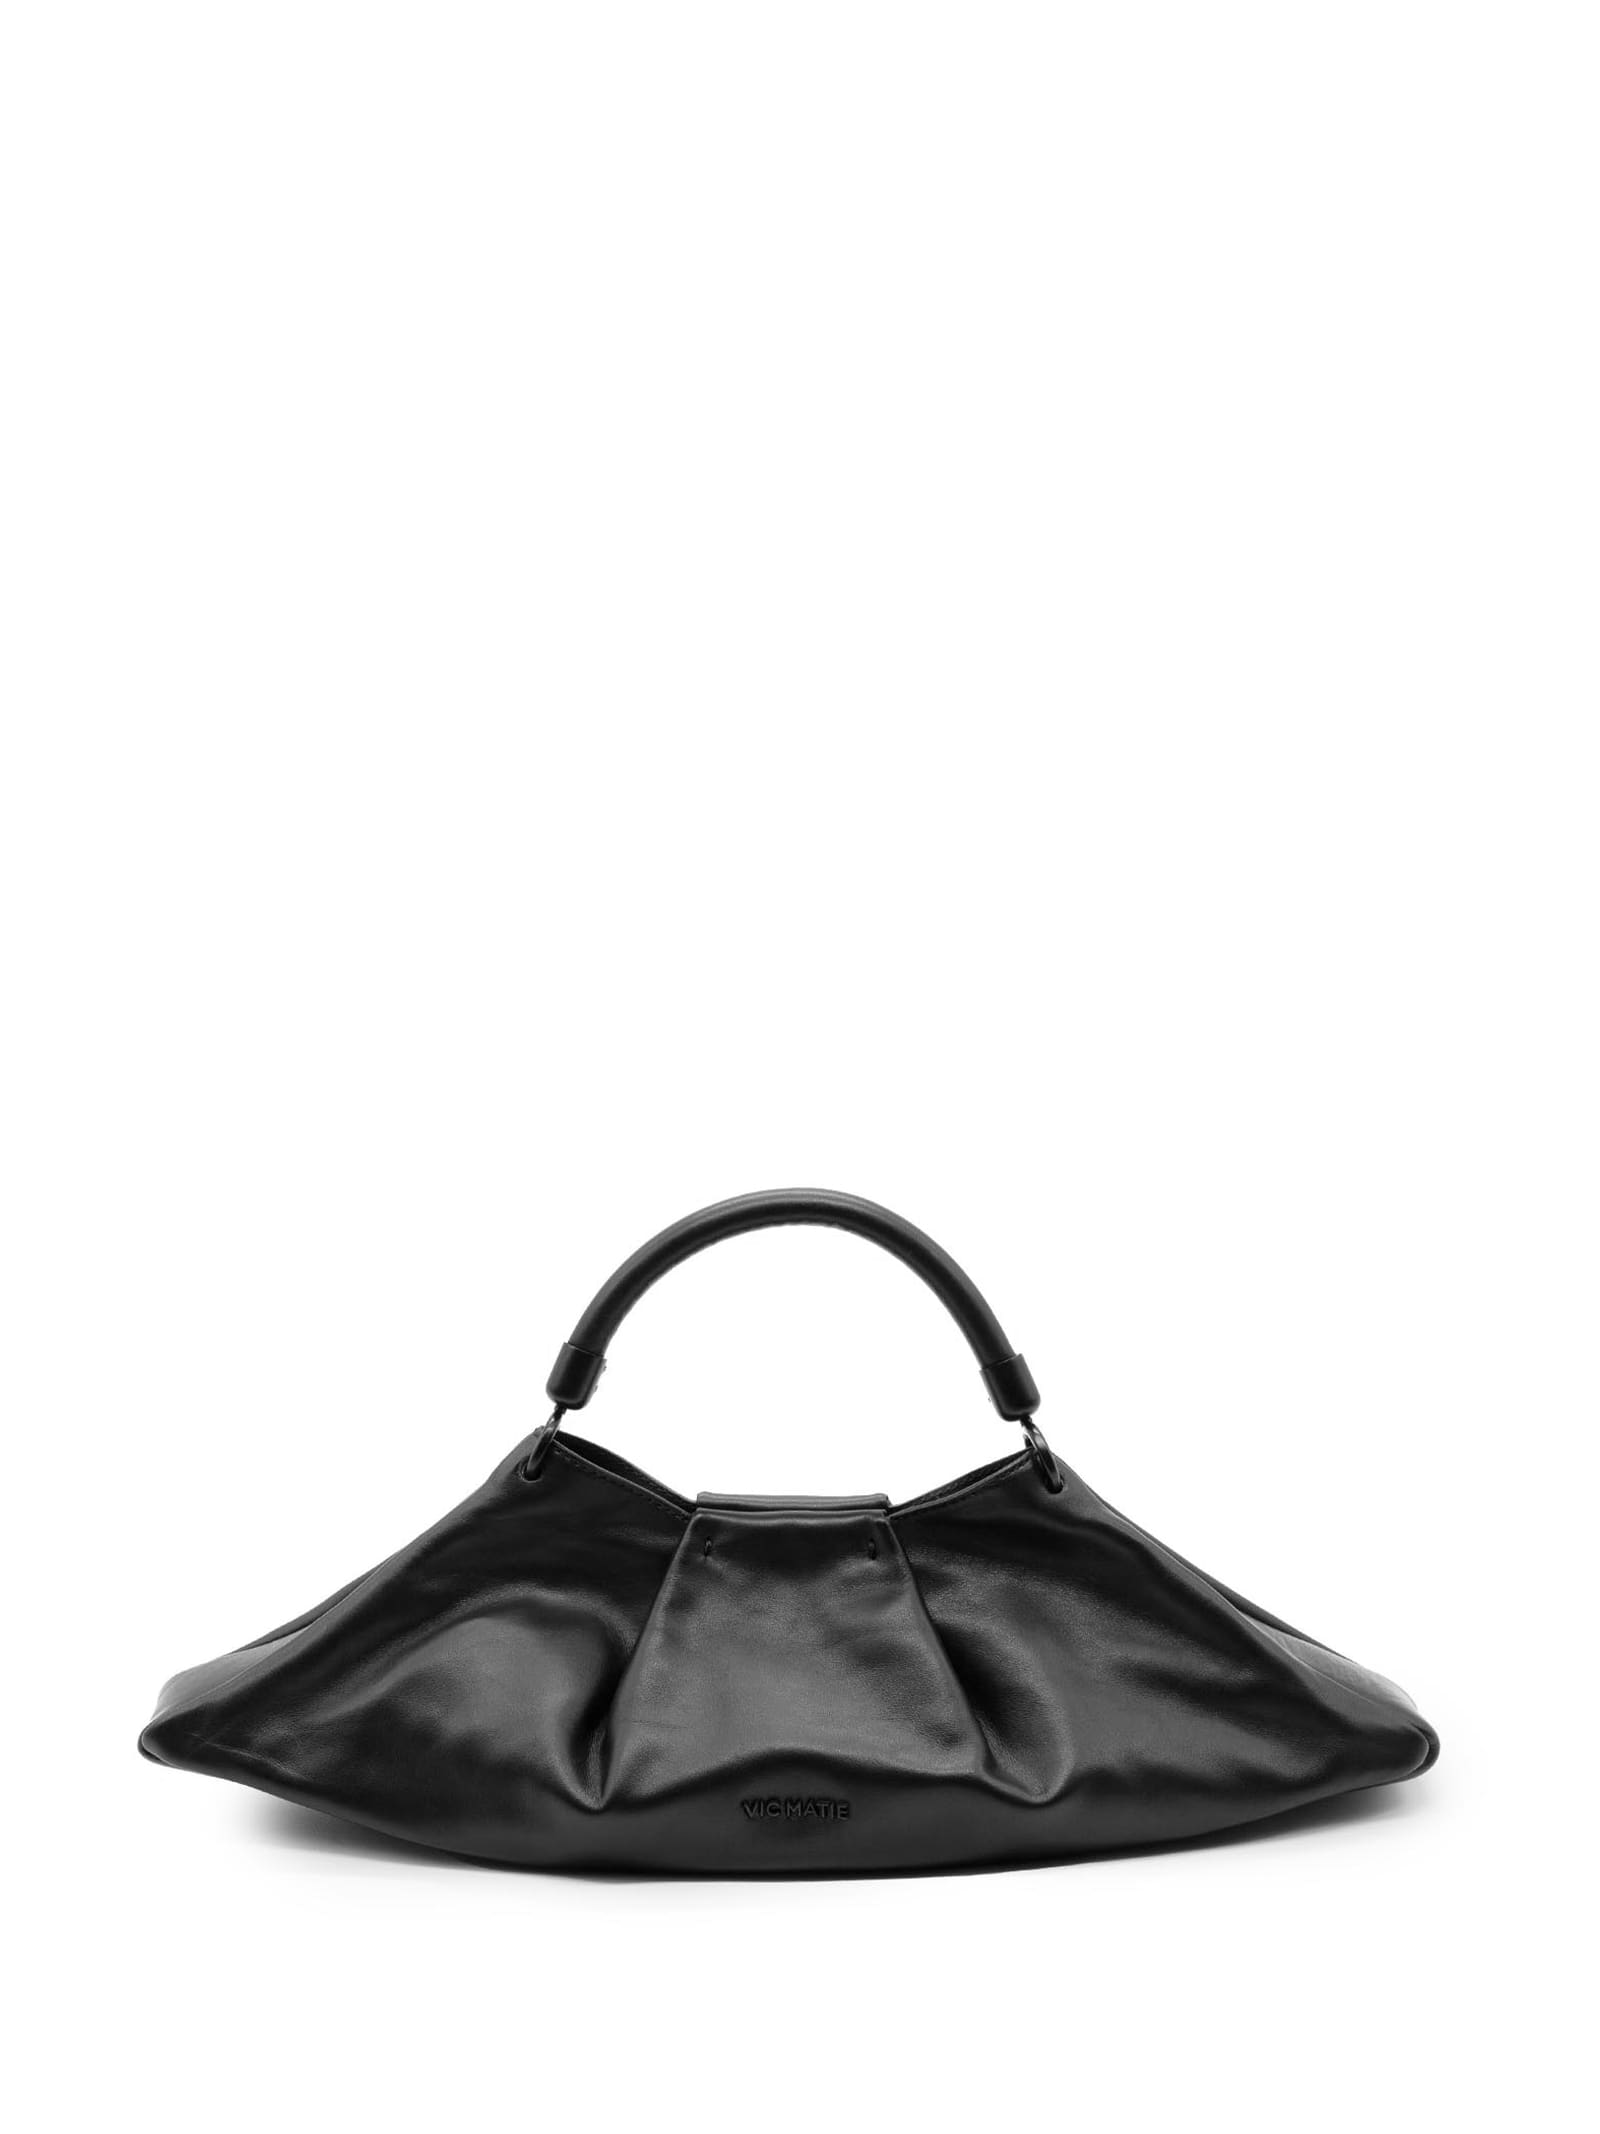 Vic Matié Black Leather Clutch Bag With Shoulder Strap